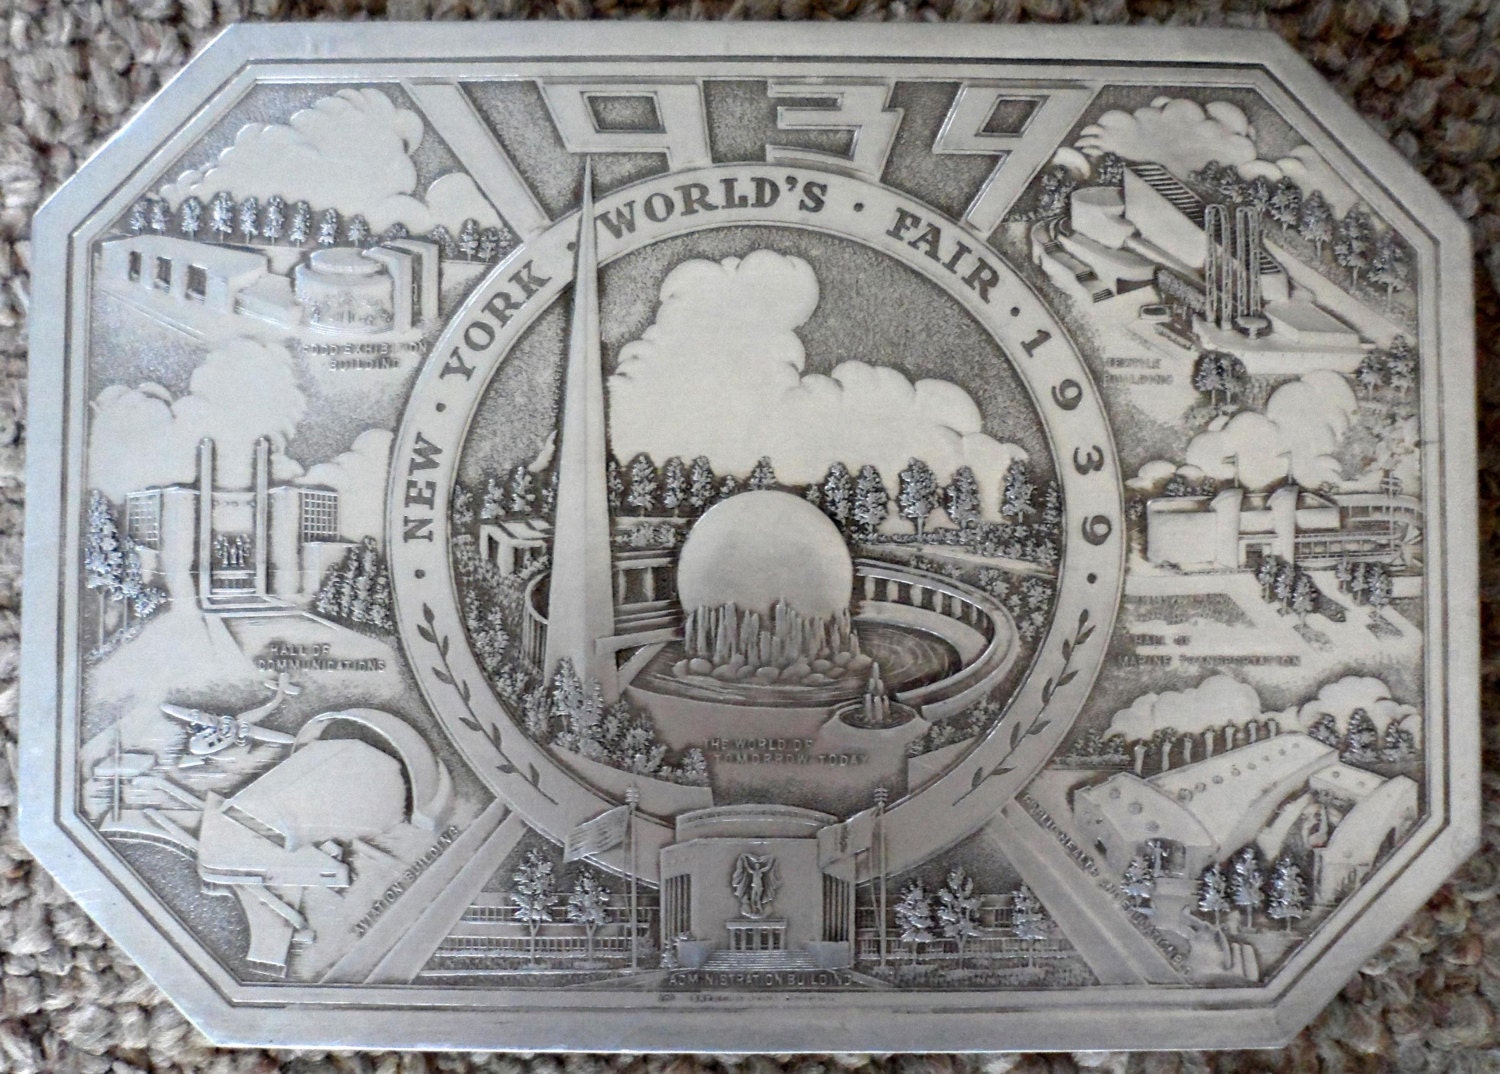 1939 New York Worlds Fair Souvenir Plaquecollectible Signs